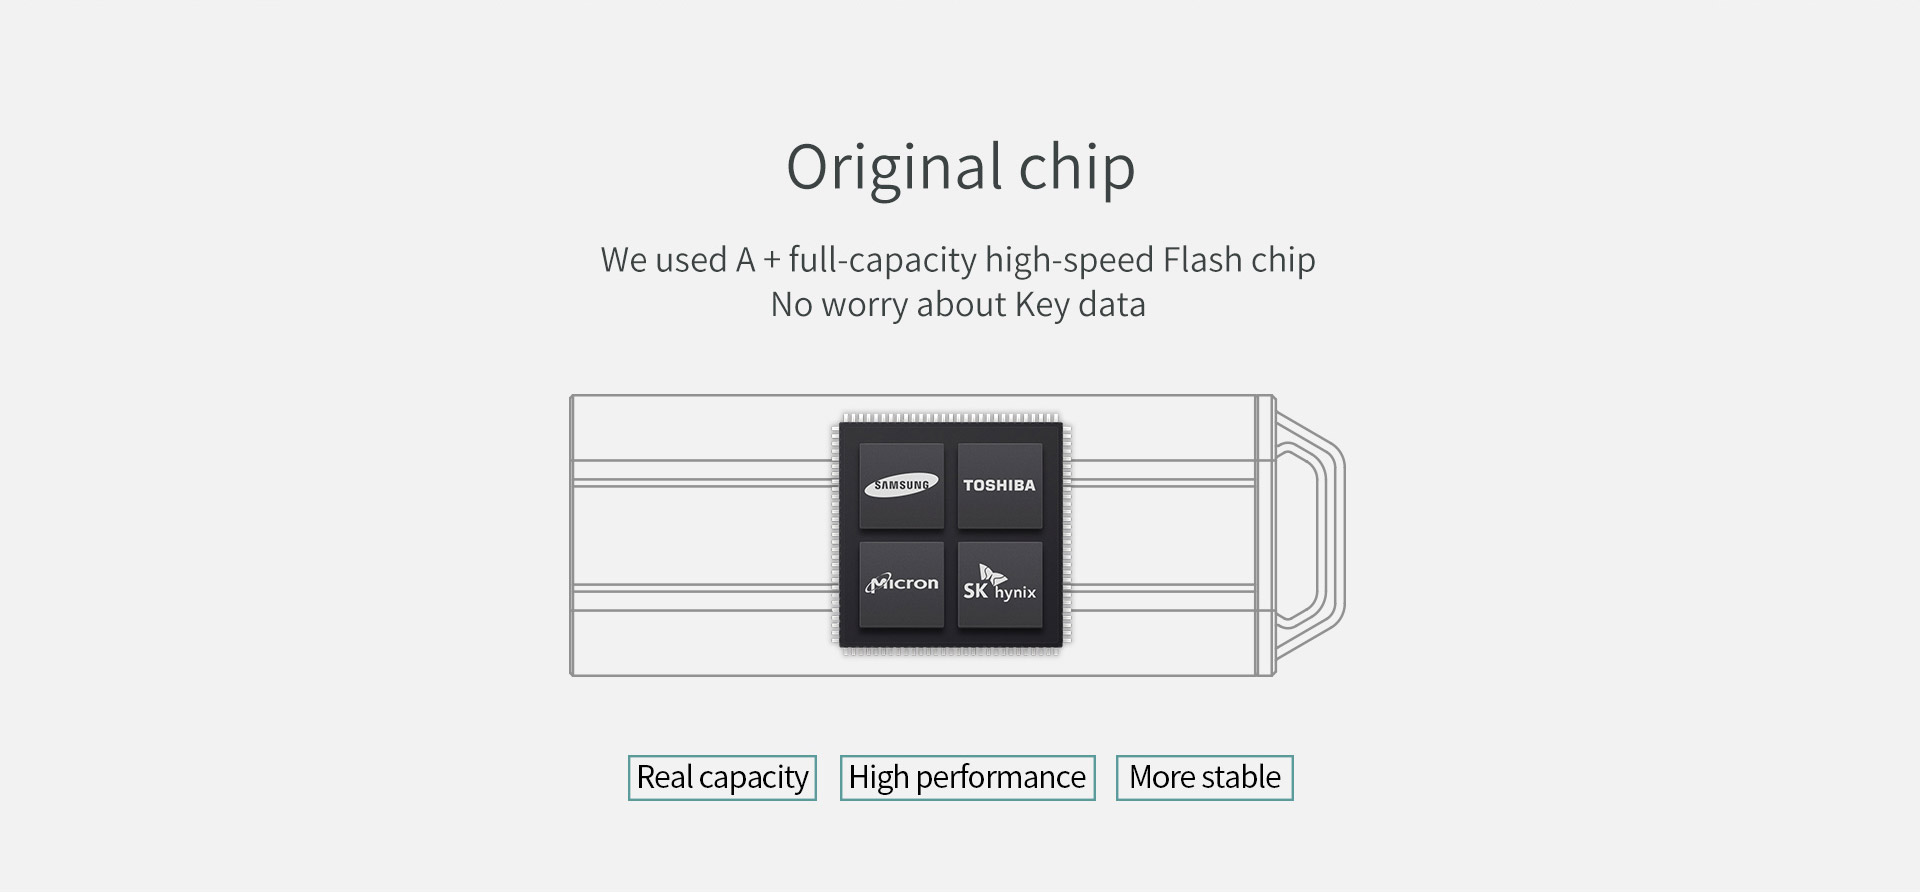 teclast coolflash fi3.0 waterproof high speed usb 3.0 flash drive